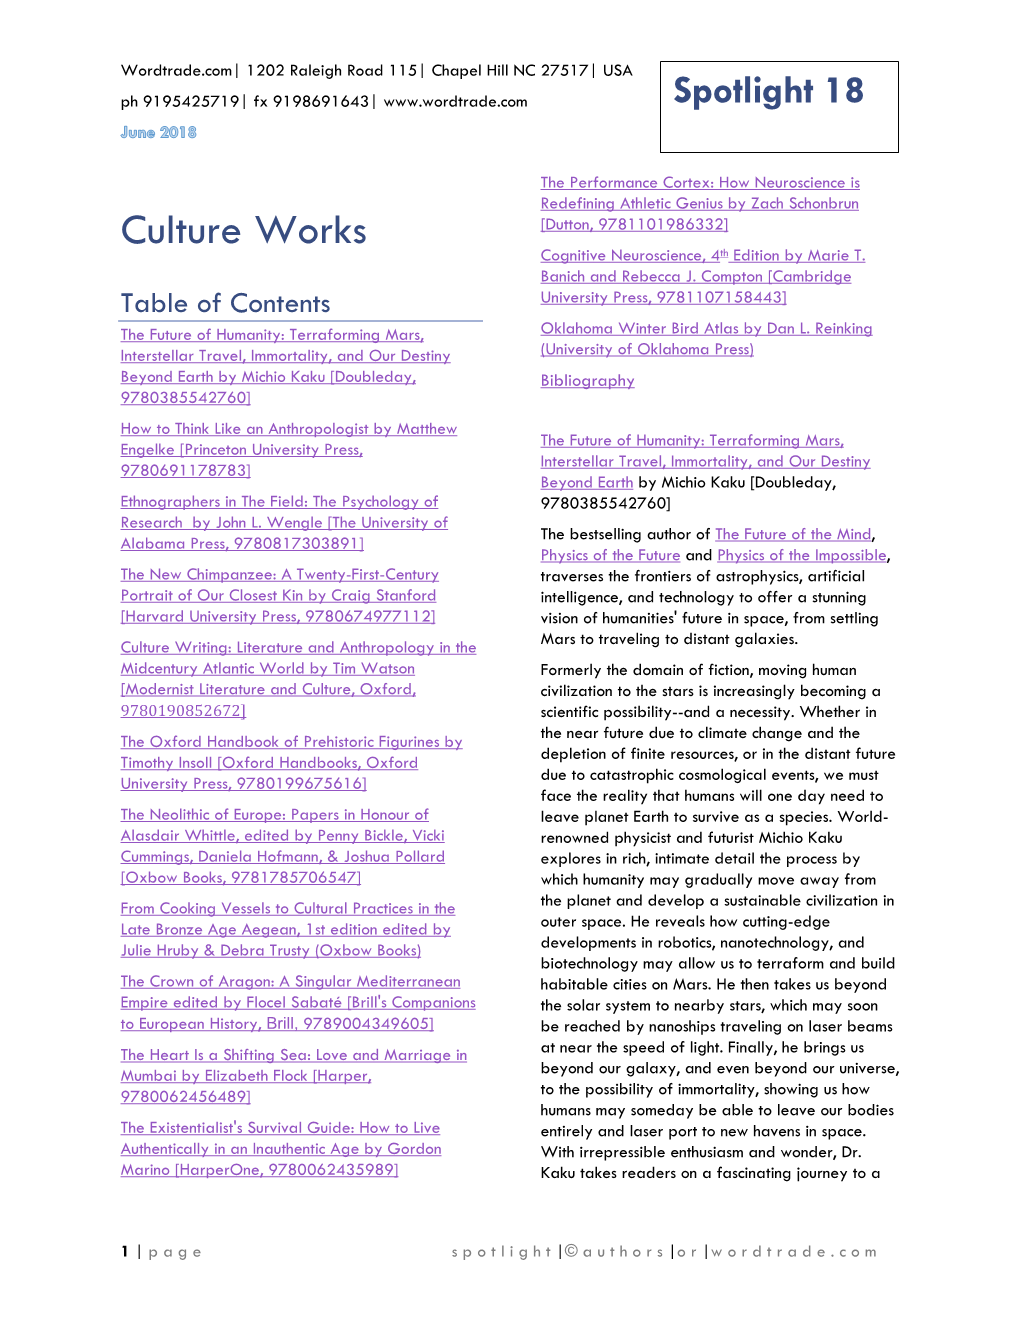 Culture Works, June 2018